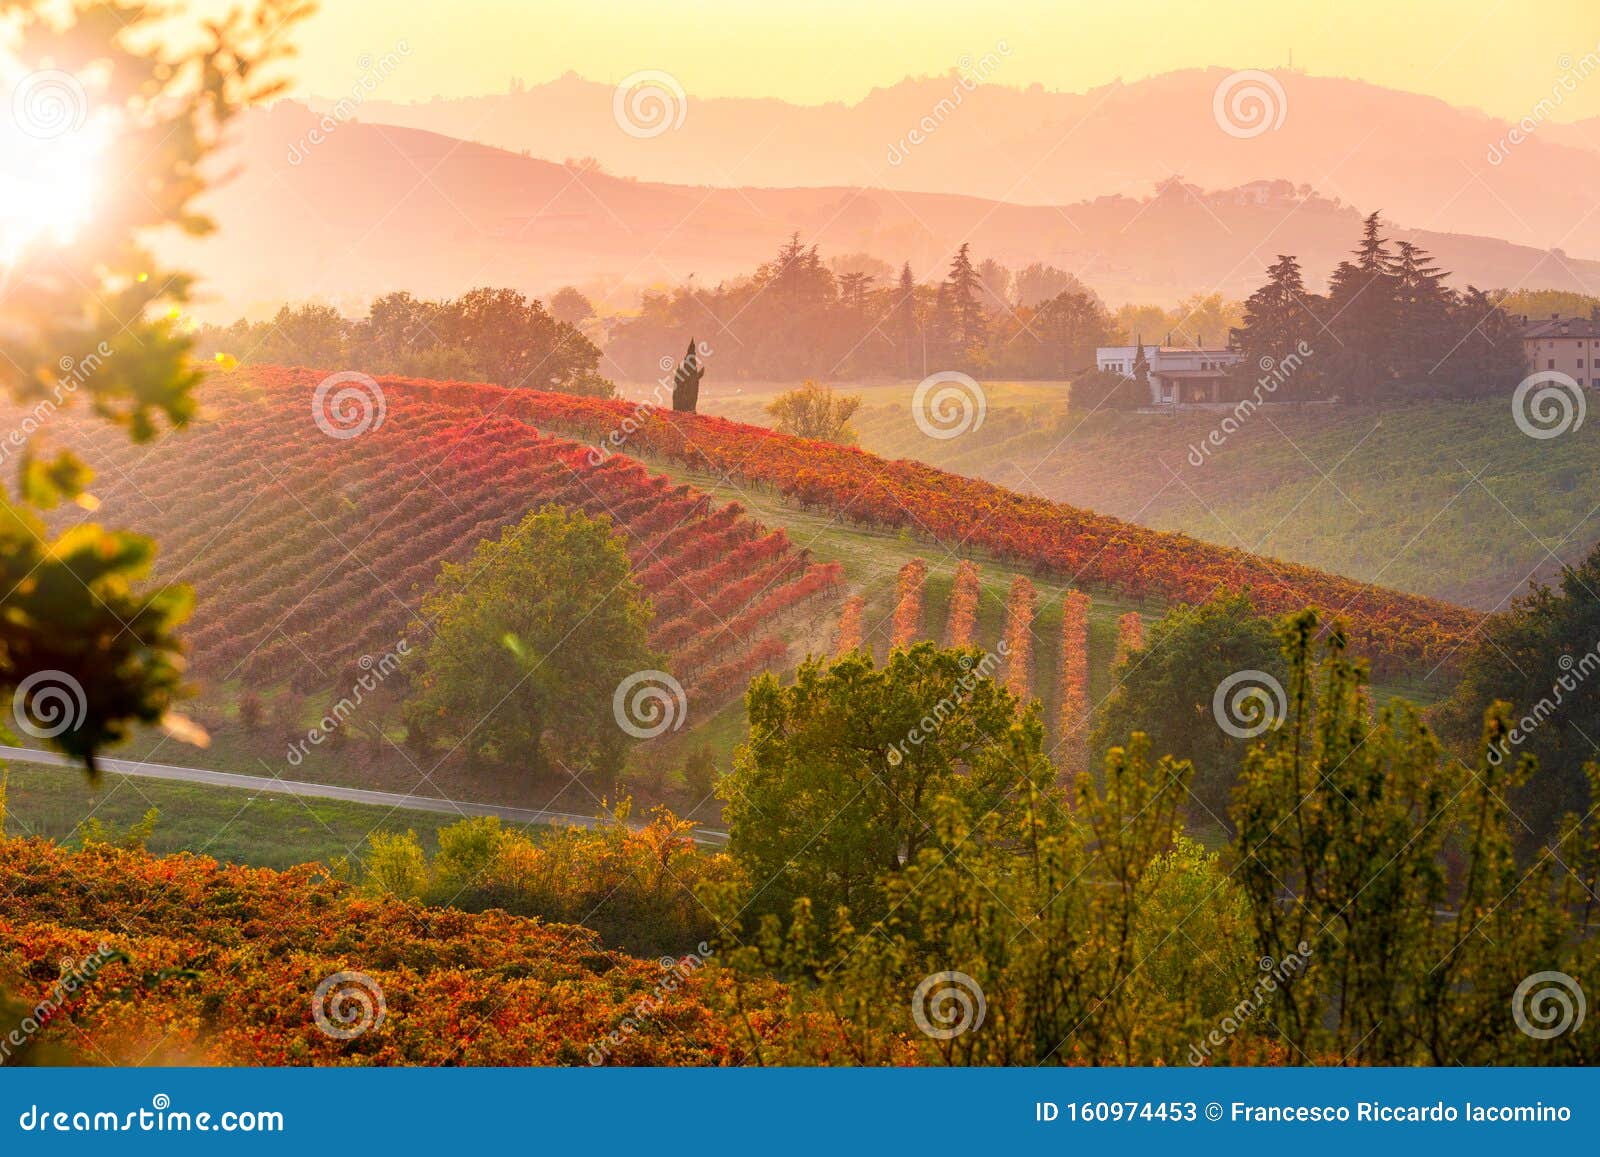 autumn vineyards landscape. geometric s and textures